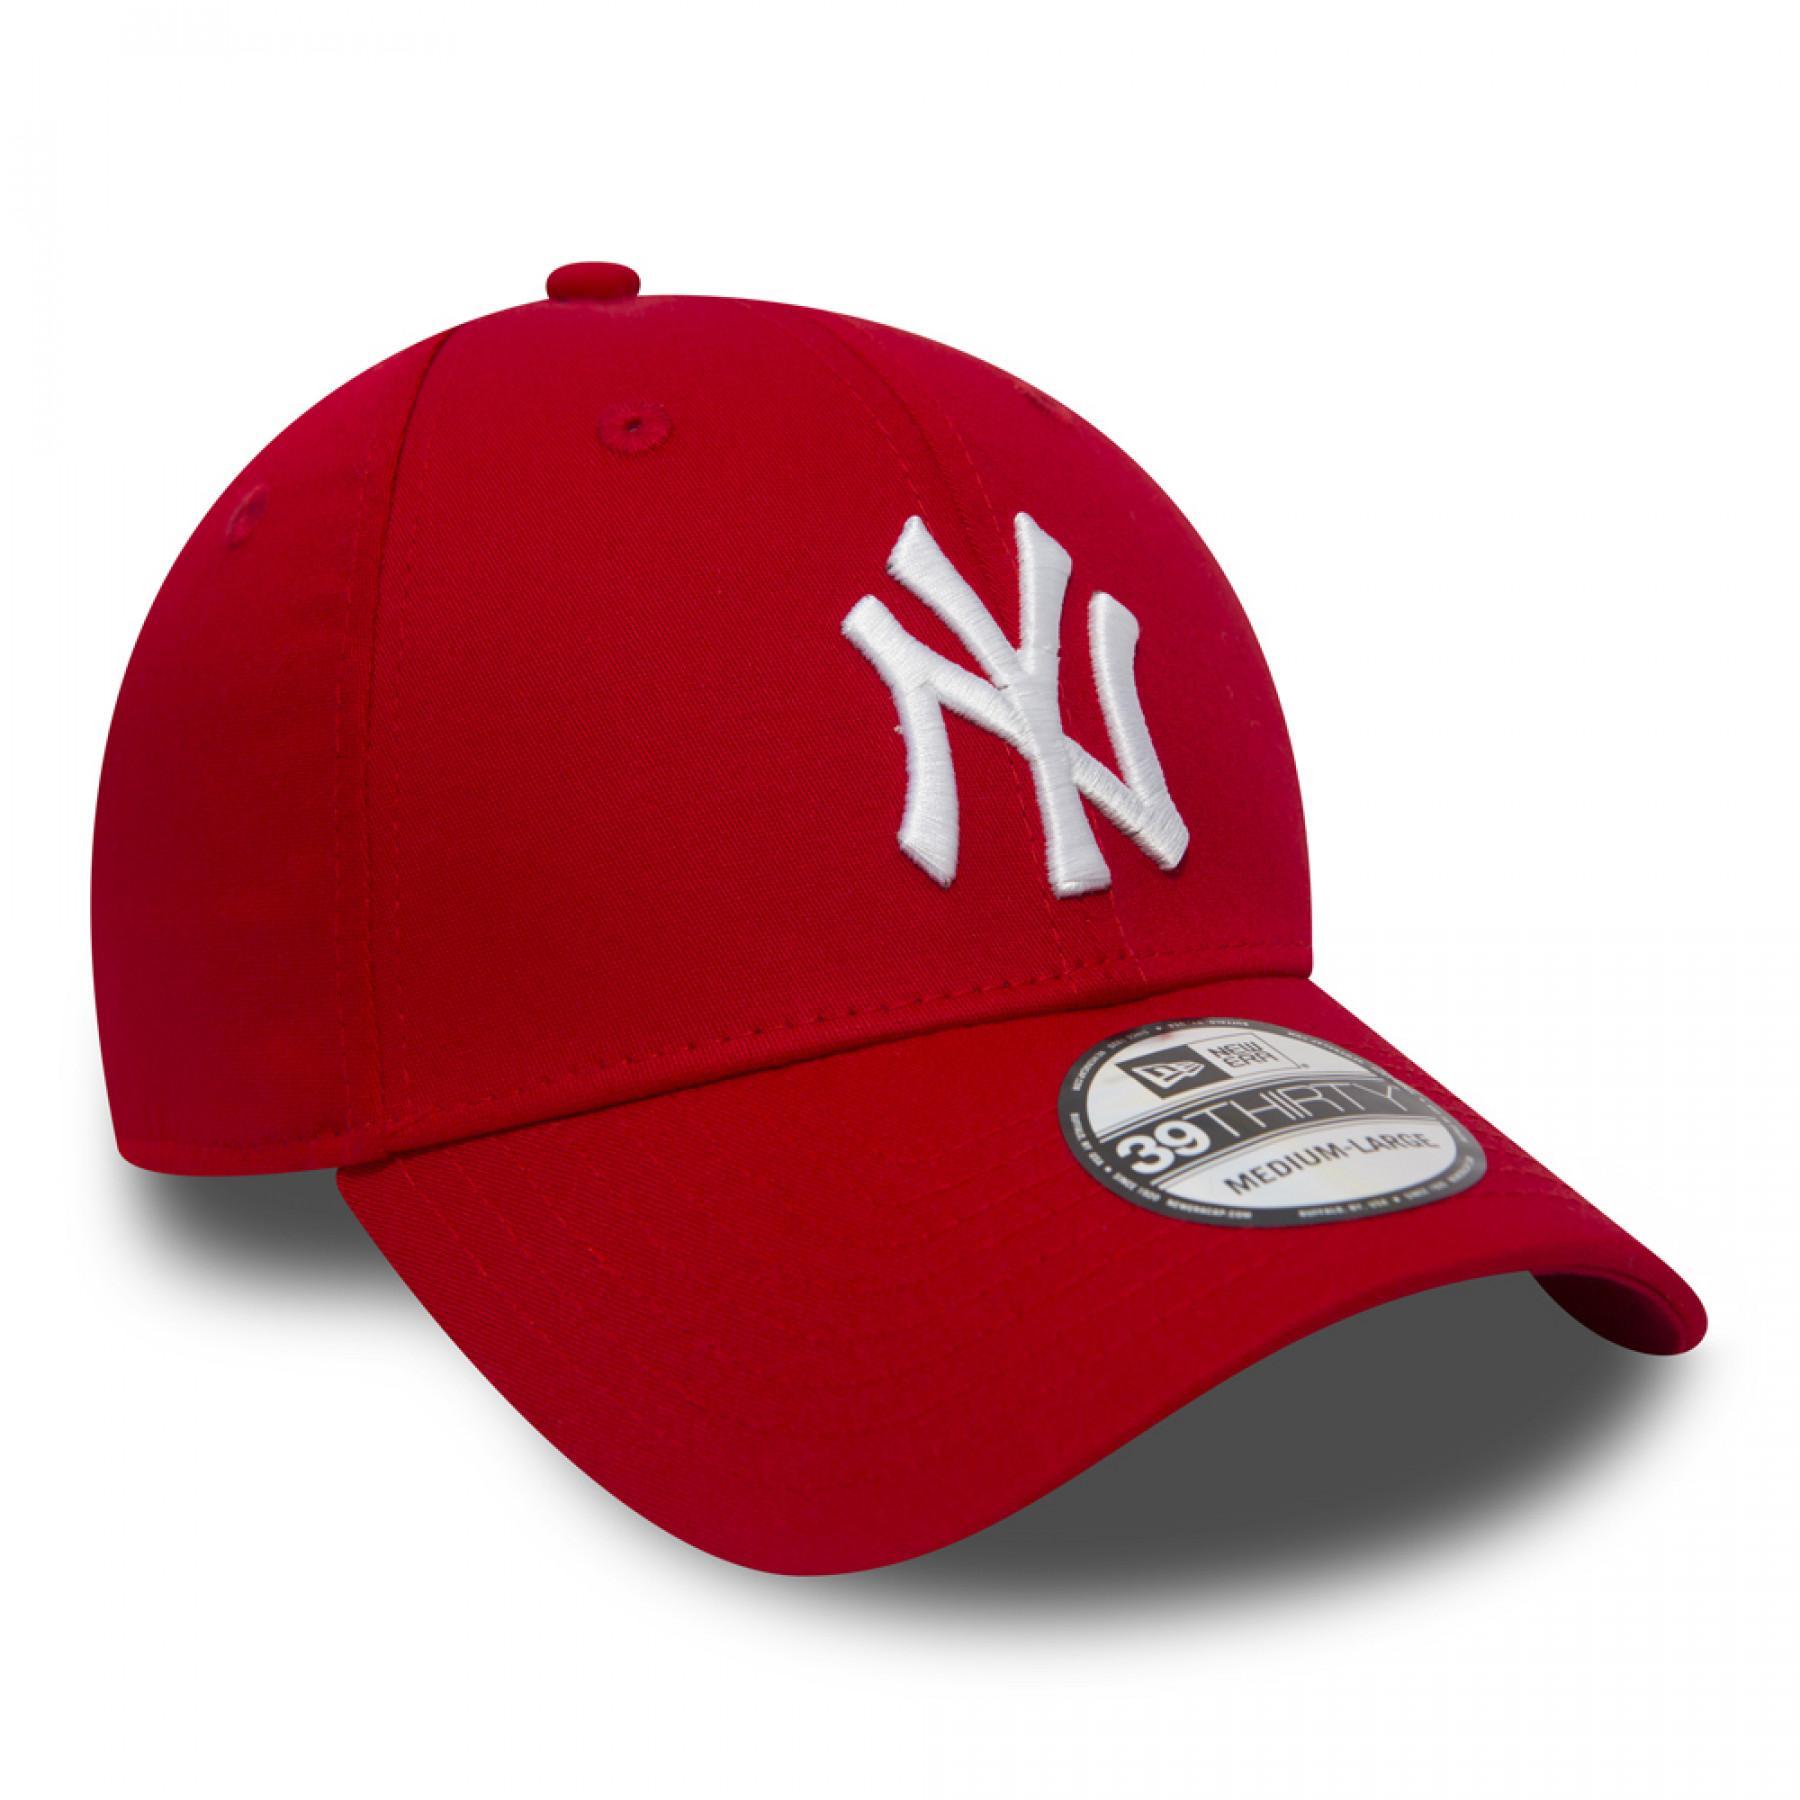 Cap New Era  essential 39thirty New York Yankees